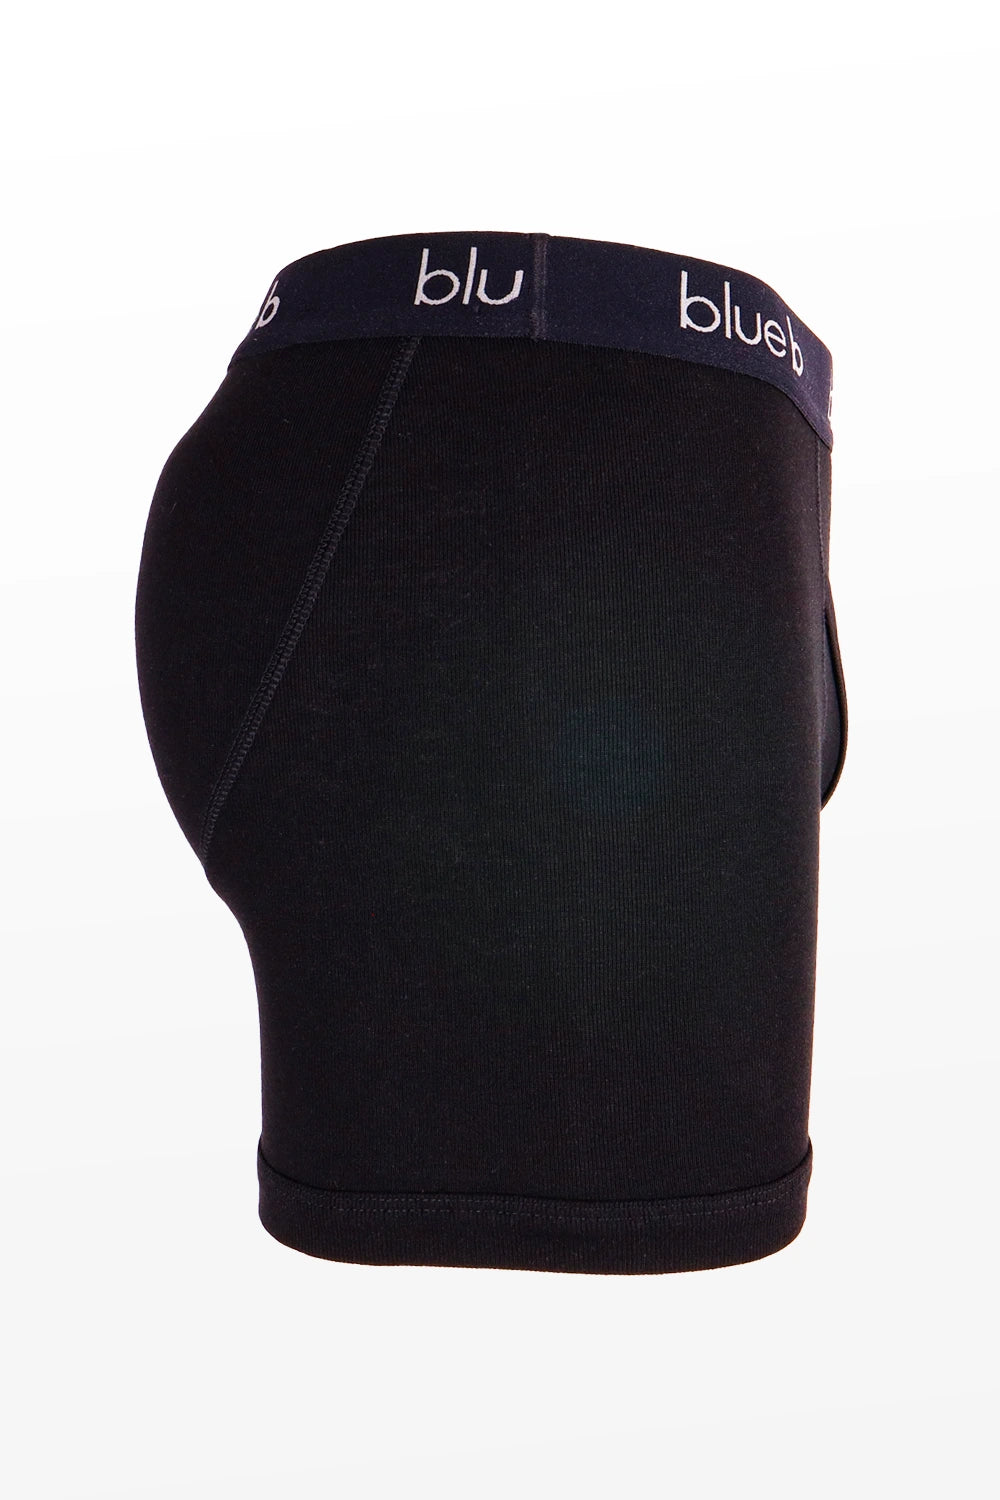 Blue B Apparel Men's Boxer Underwear MB918